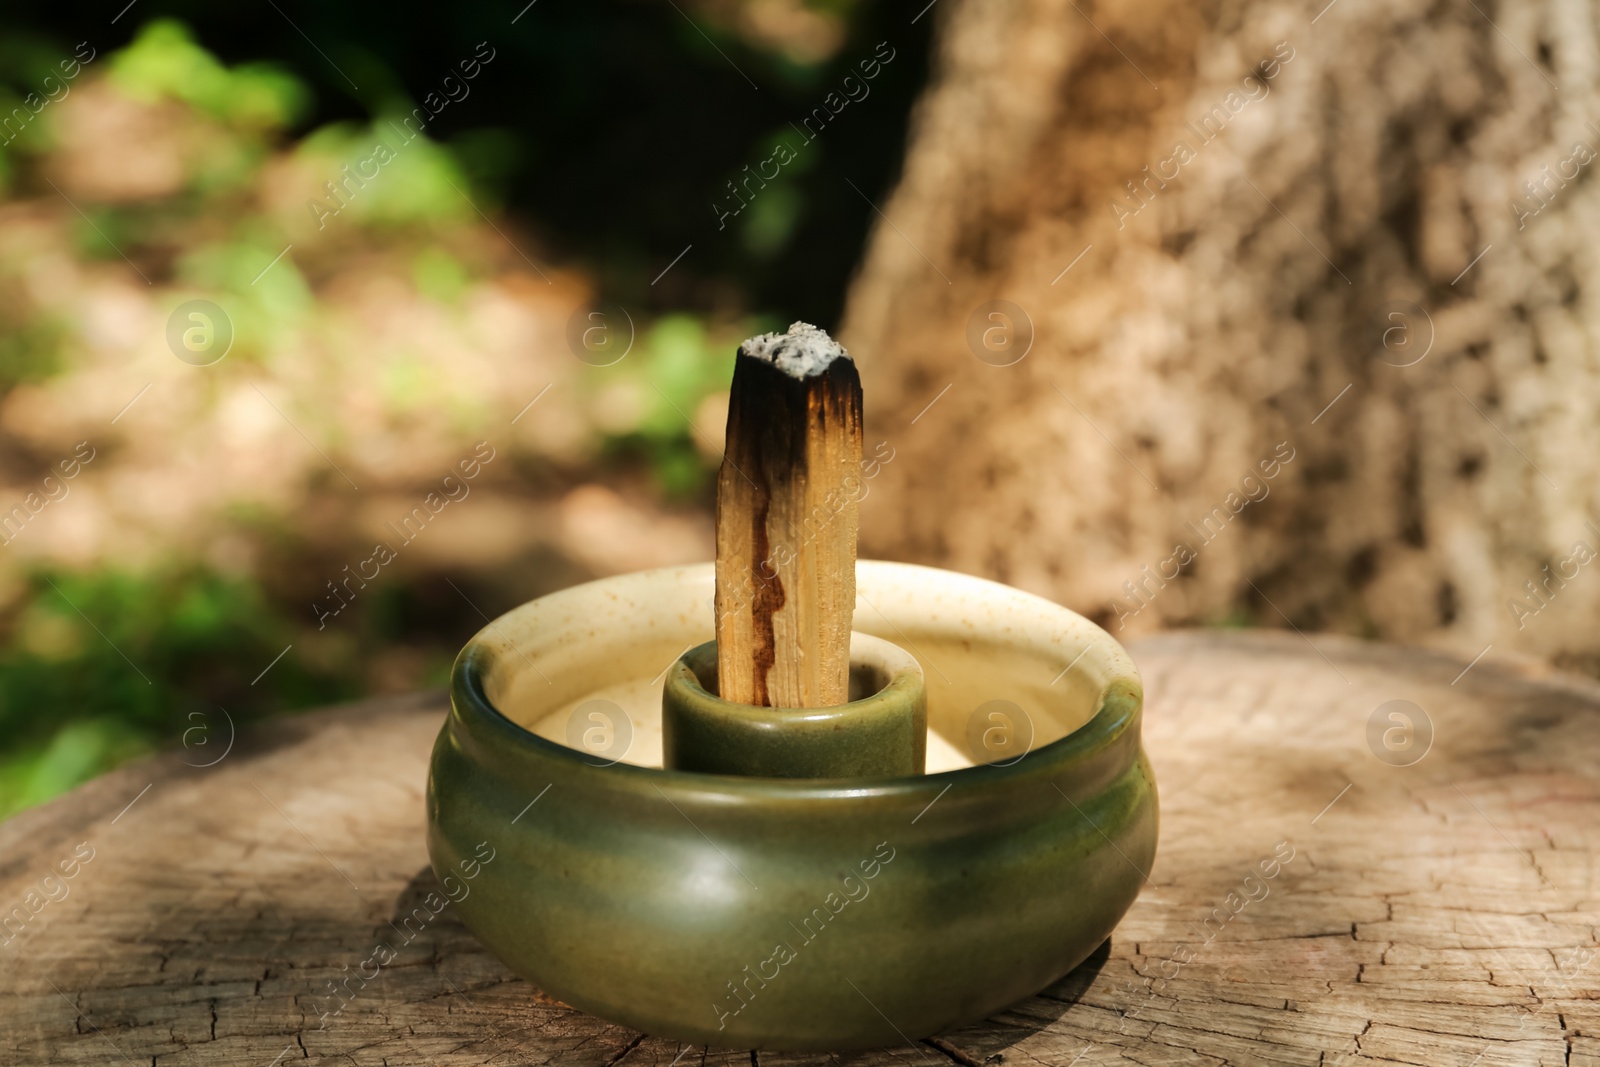 Photo of Smoldering palo santo stick in holder on wooden stump outdoors